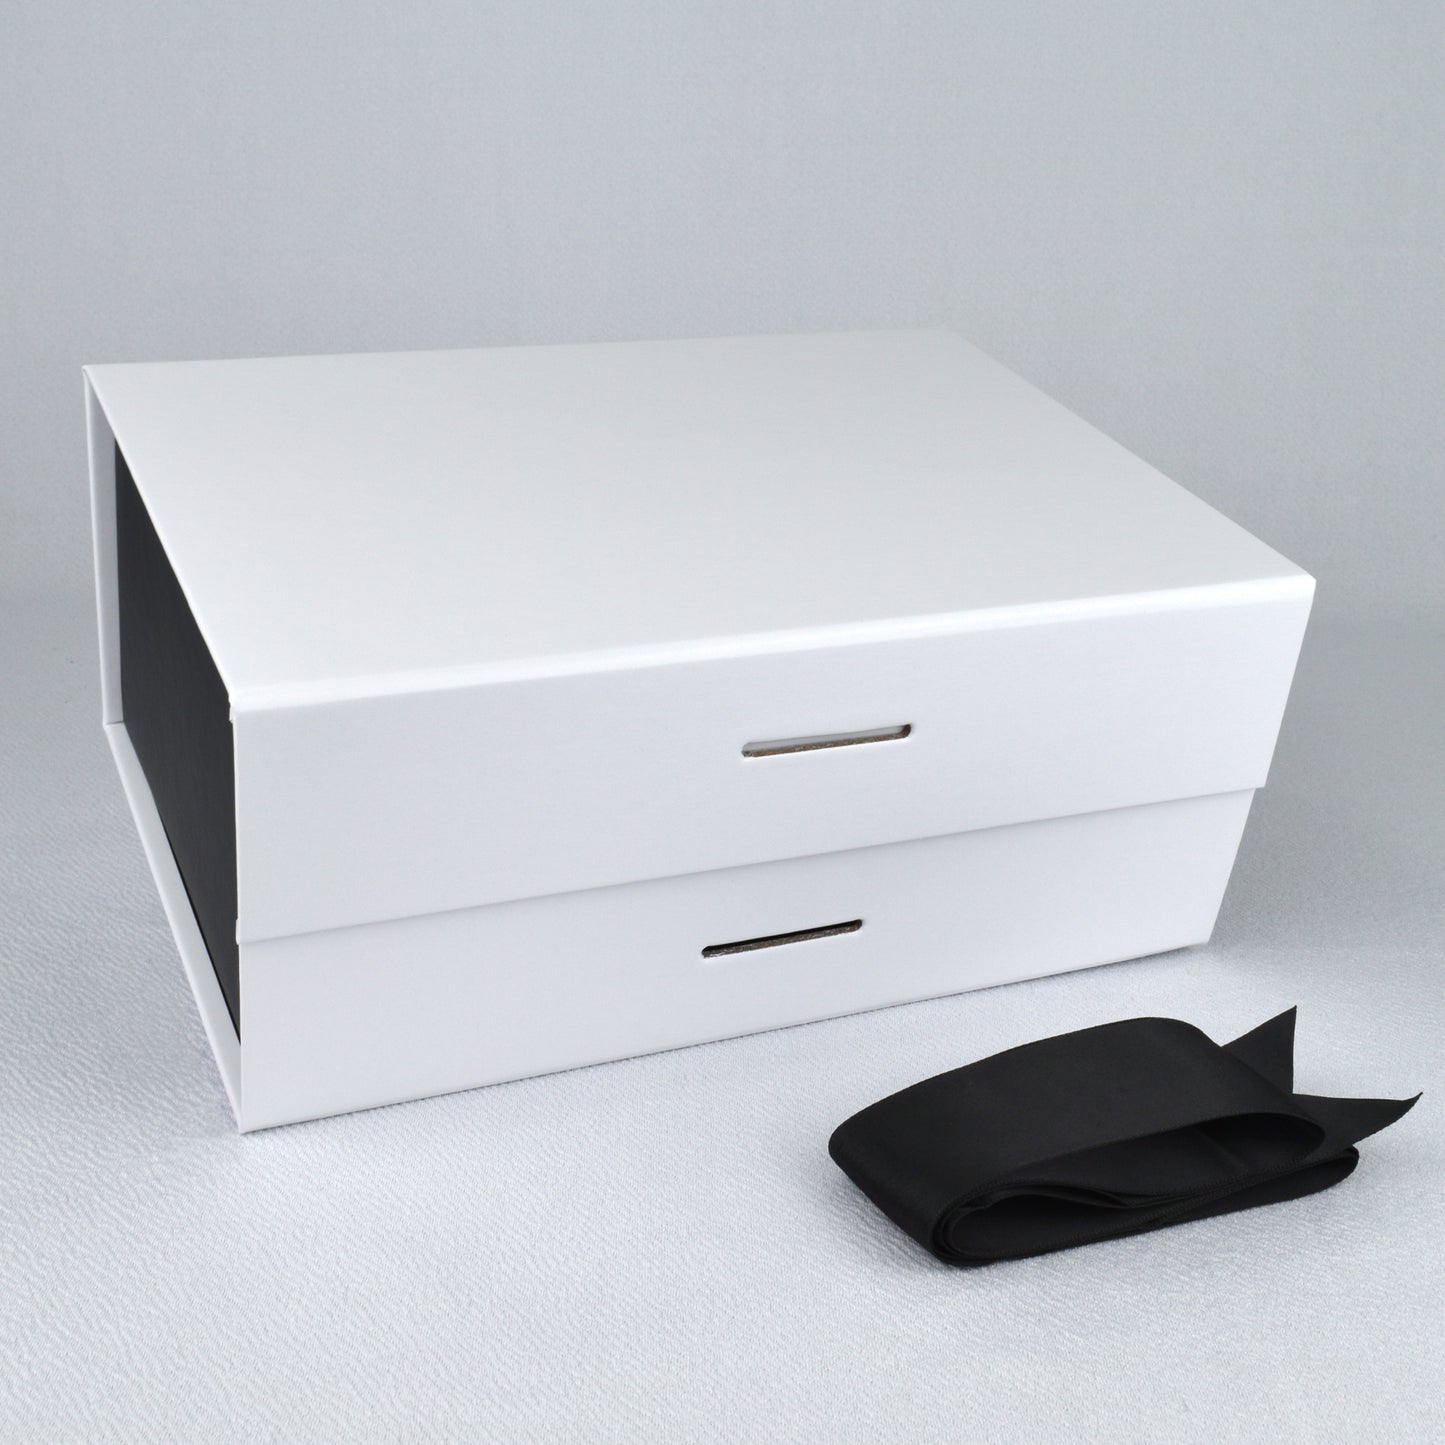 MEDIUM-LARGE Premium Gift Box with Removable Ribbon & Magnetic Closure (9.25" x 6.75" x 4")